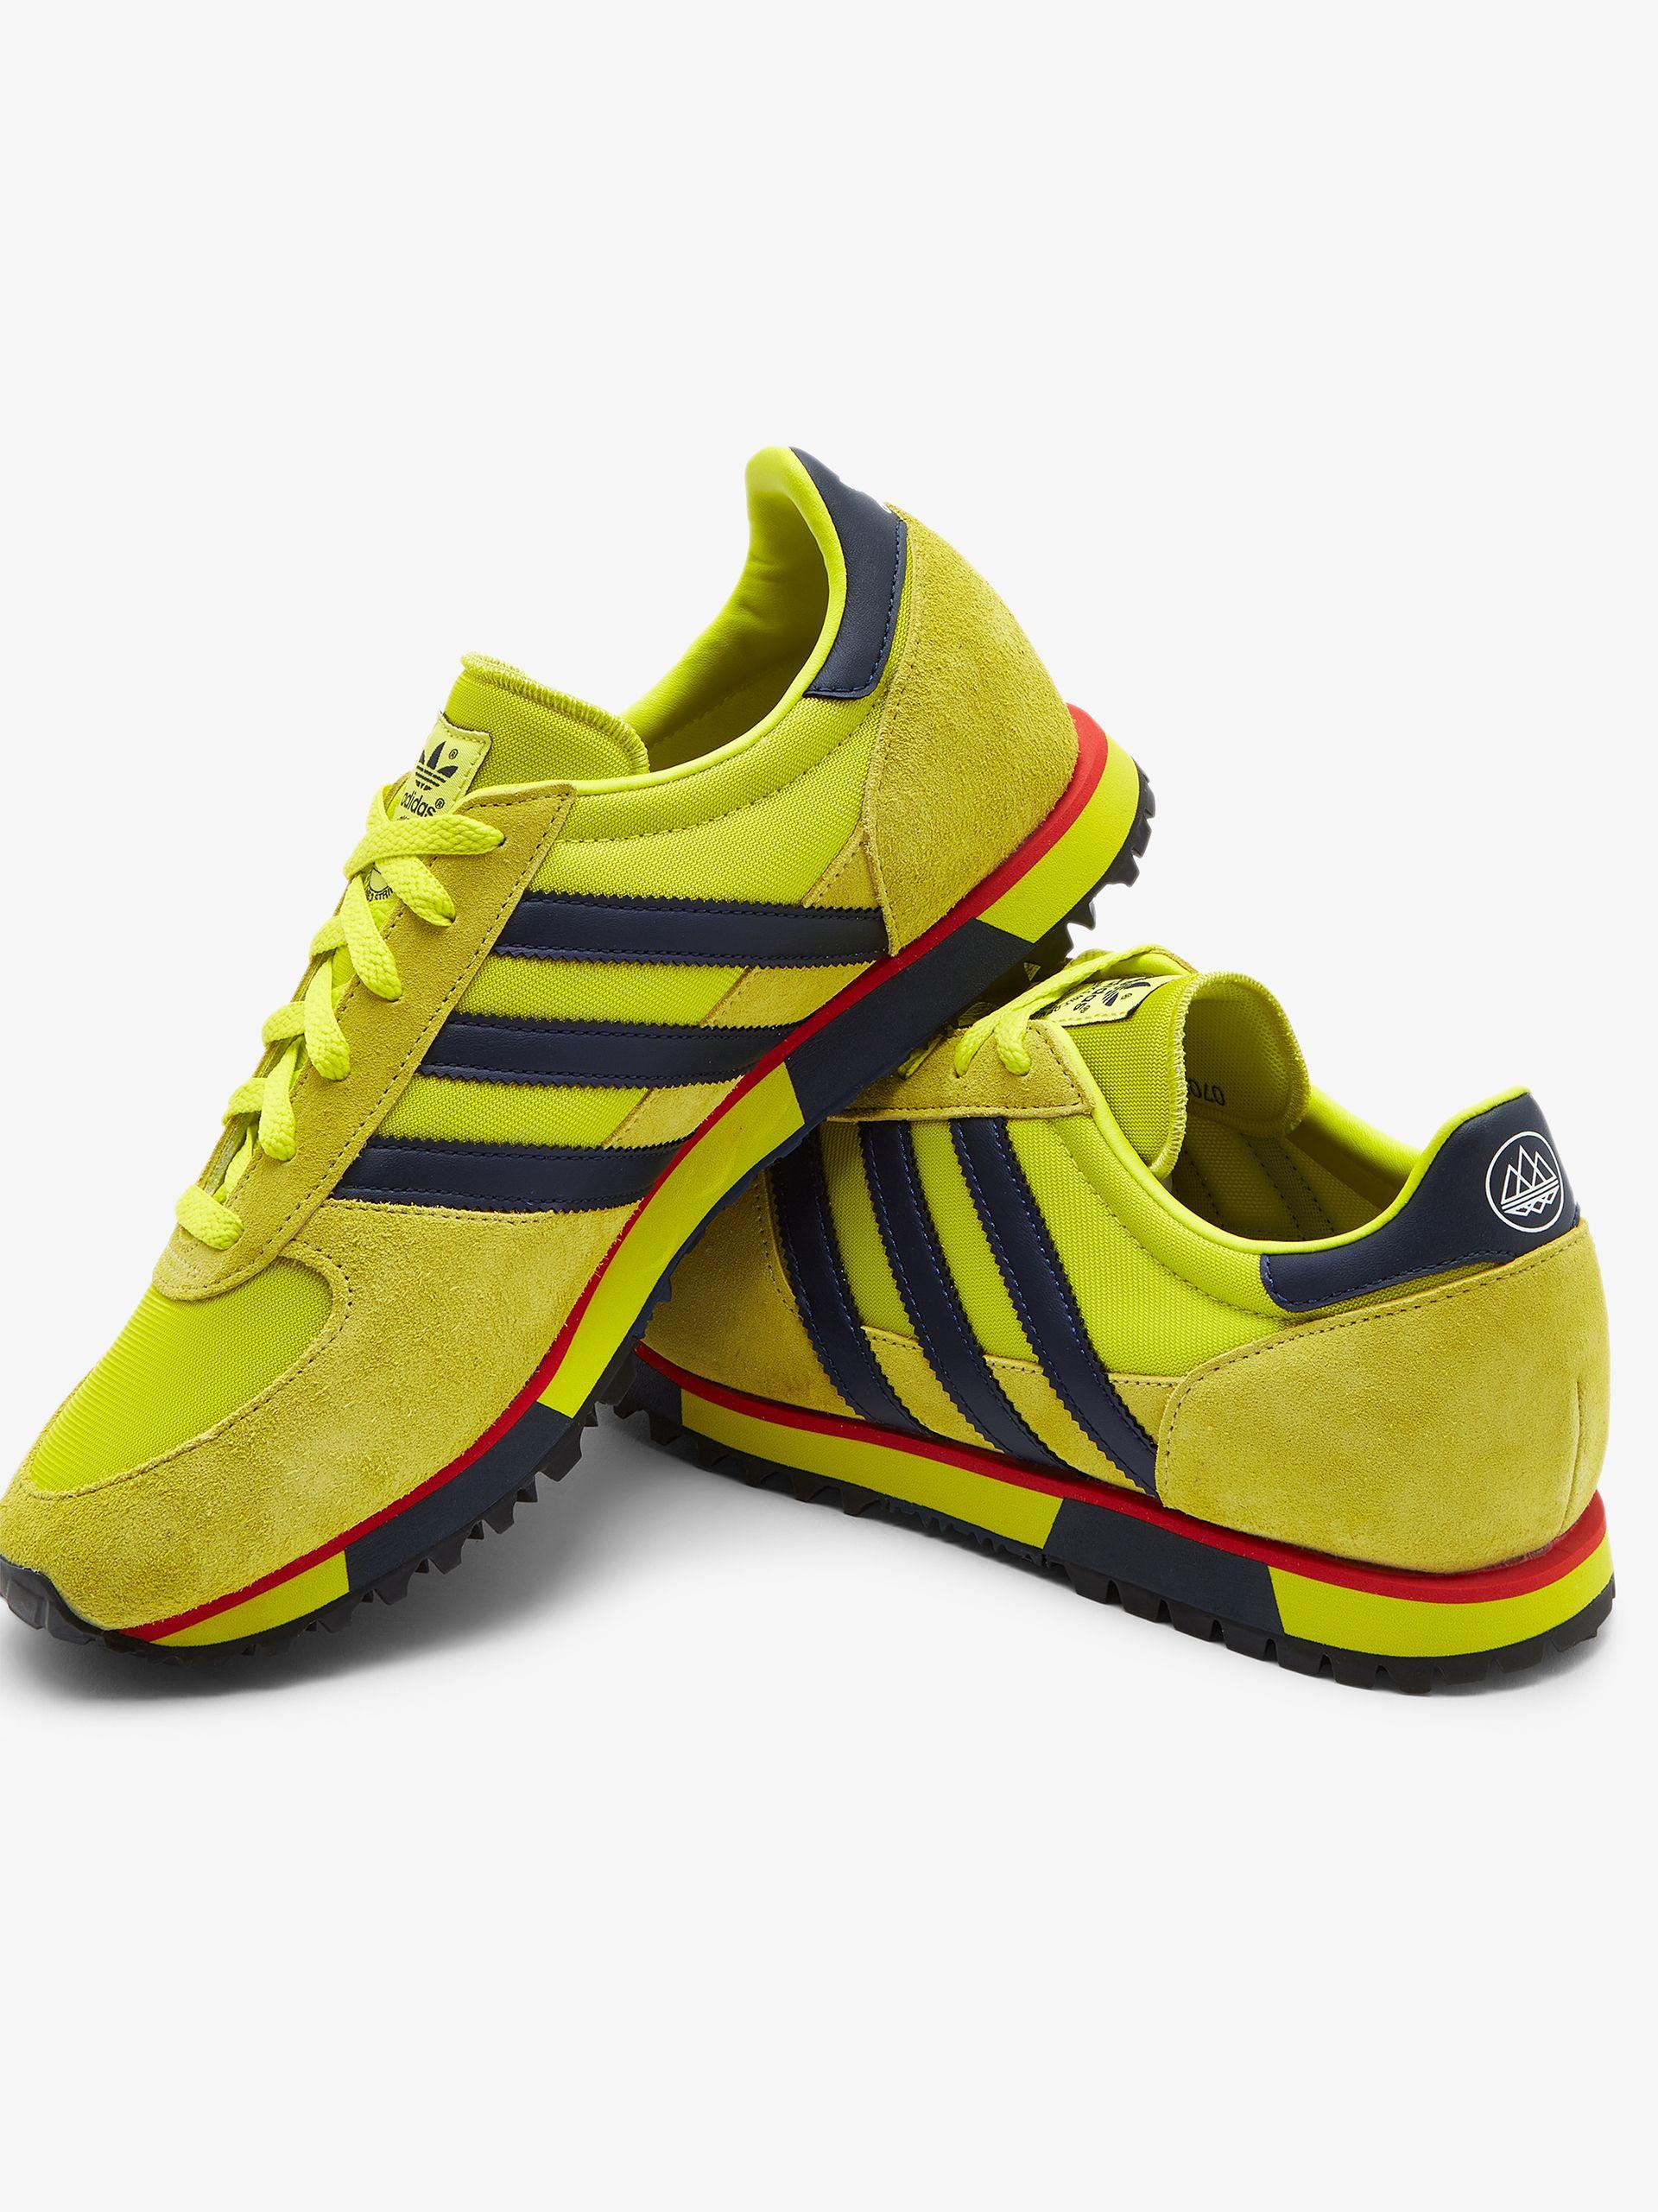 adidas Yellow Marathon 86 Sneakers for Men | Lyst